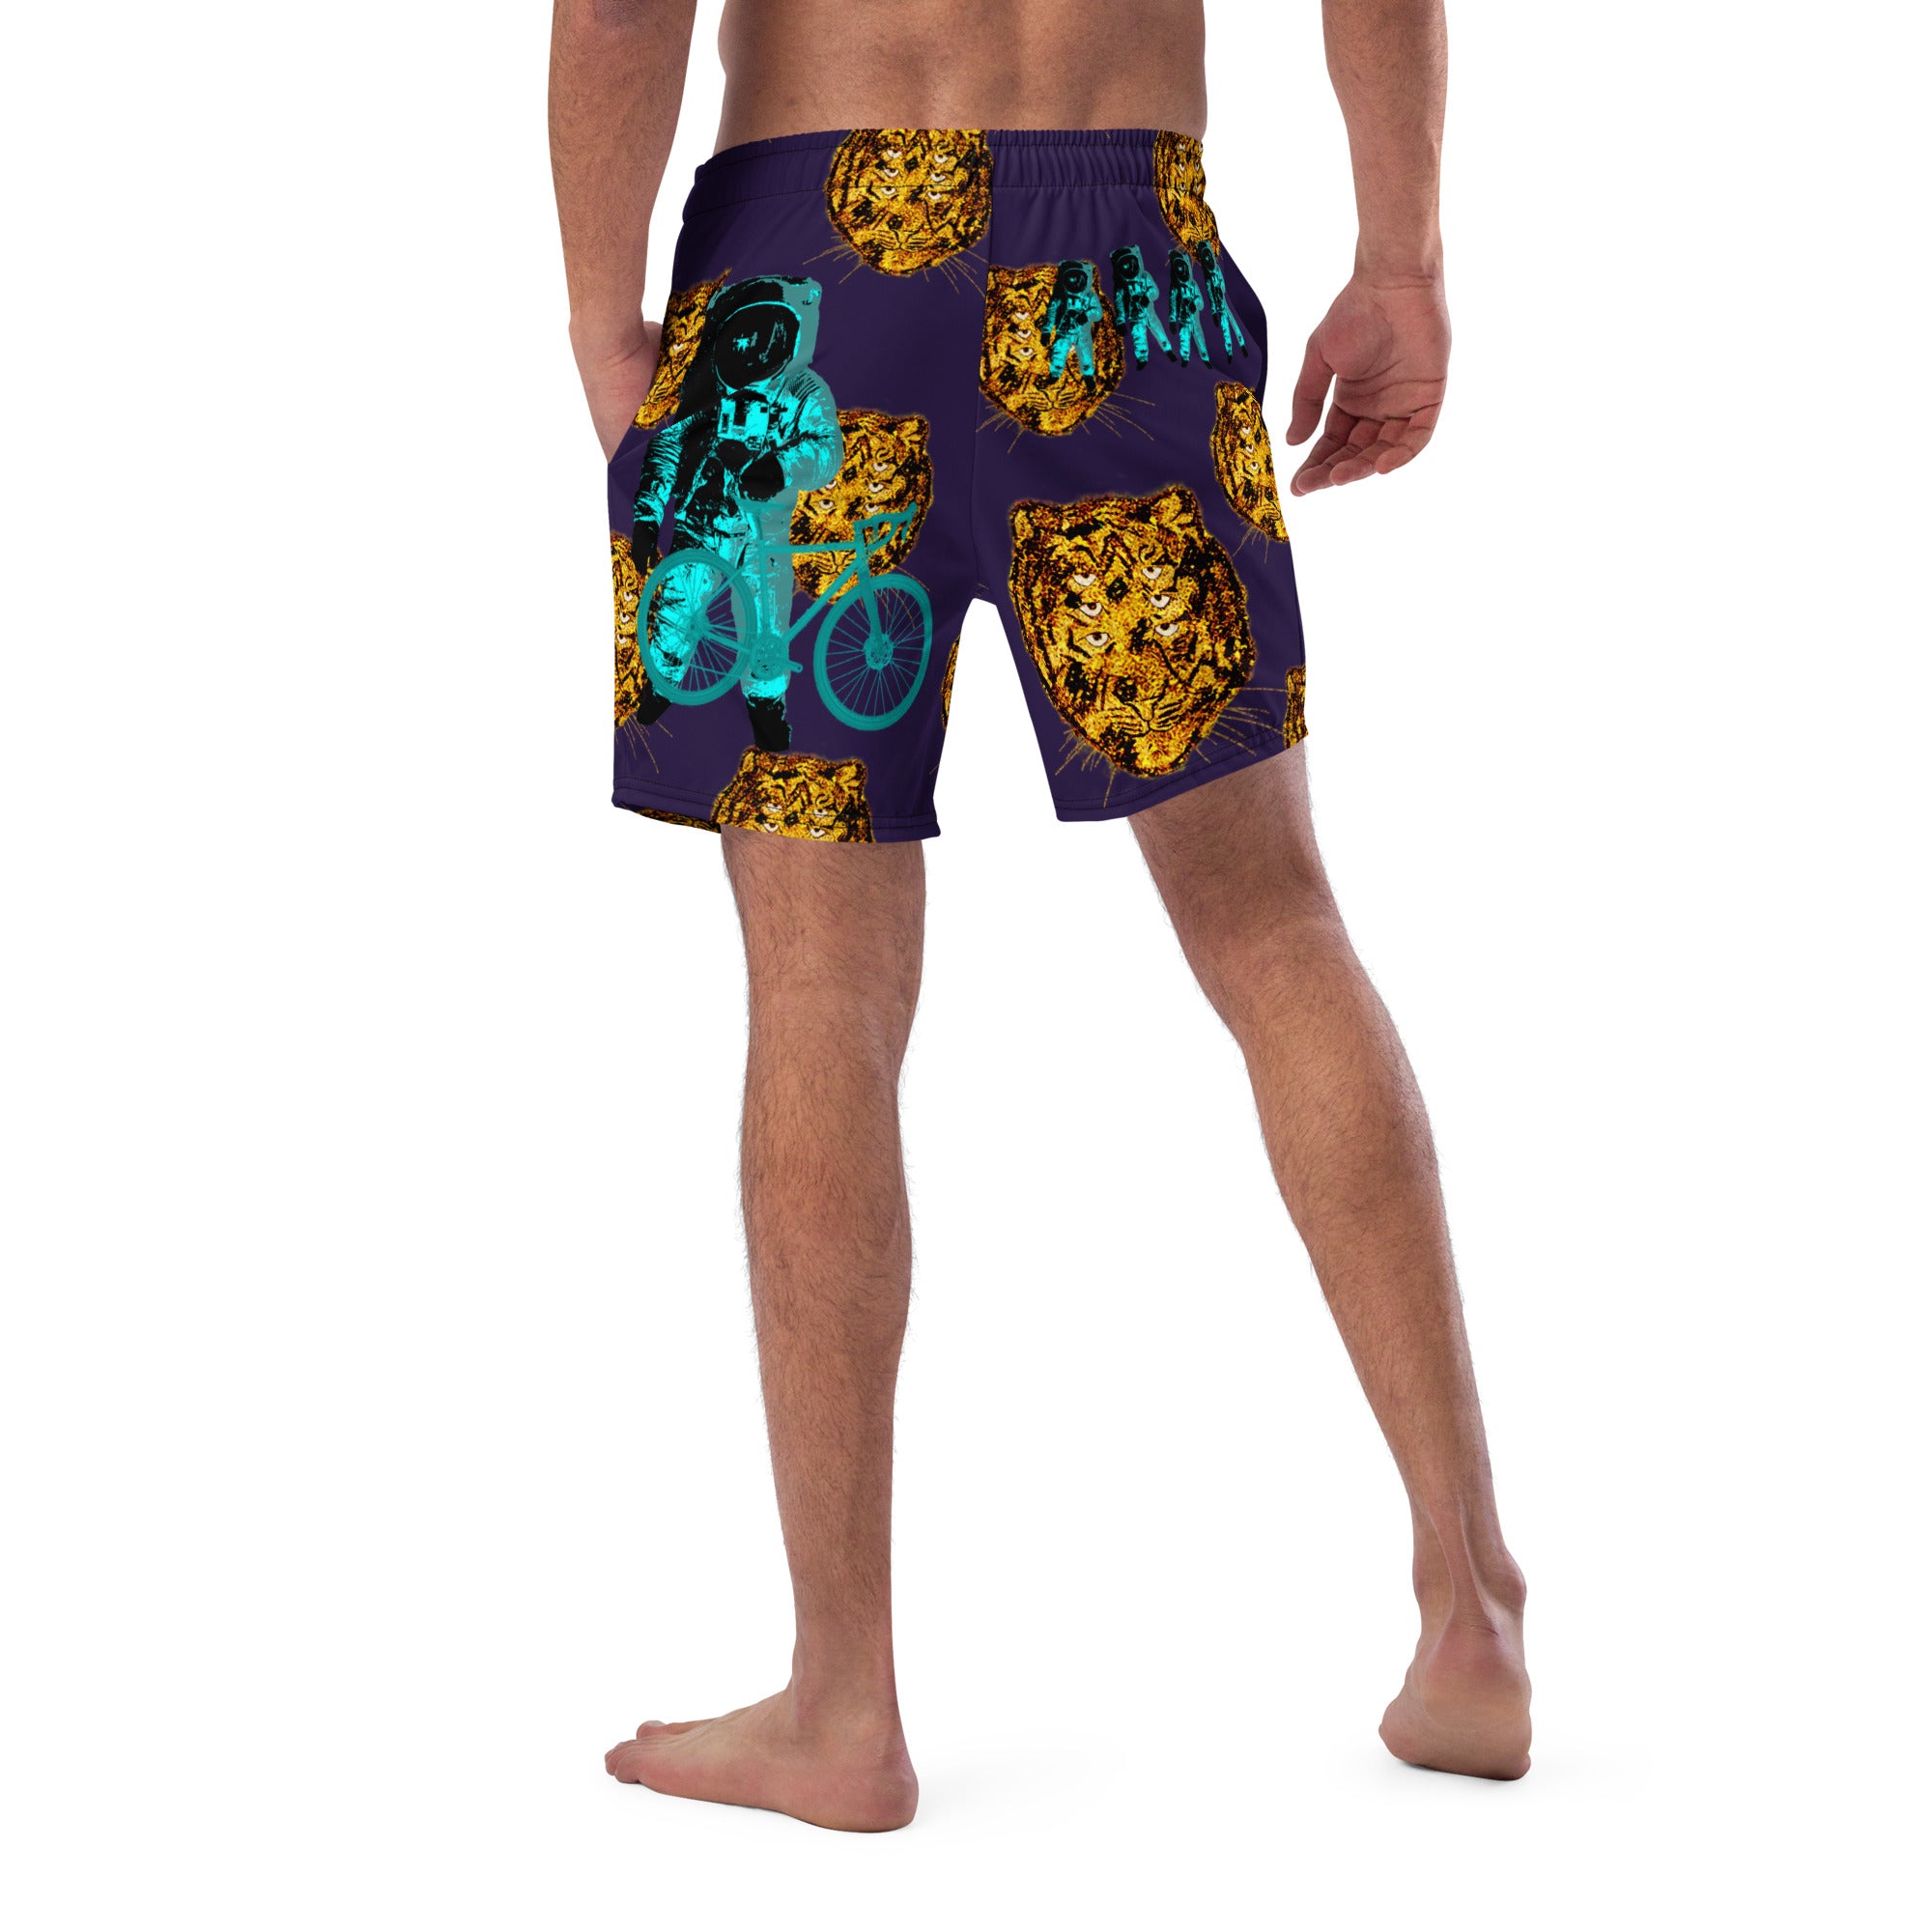 The Jeff 5.0 Men's swim trunks